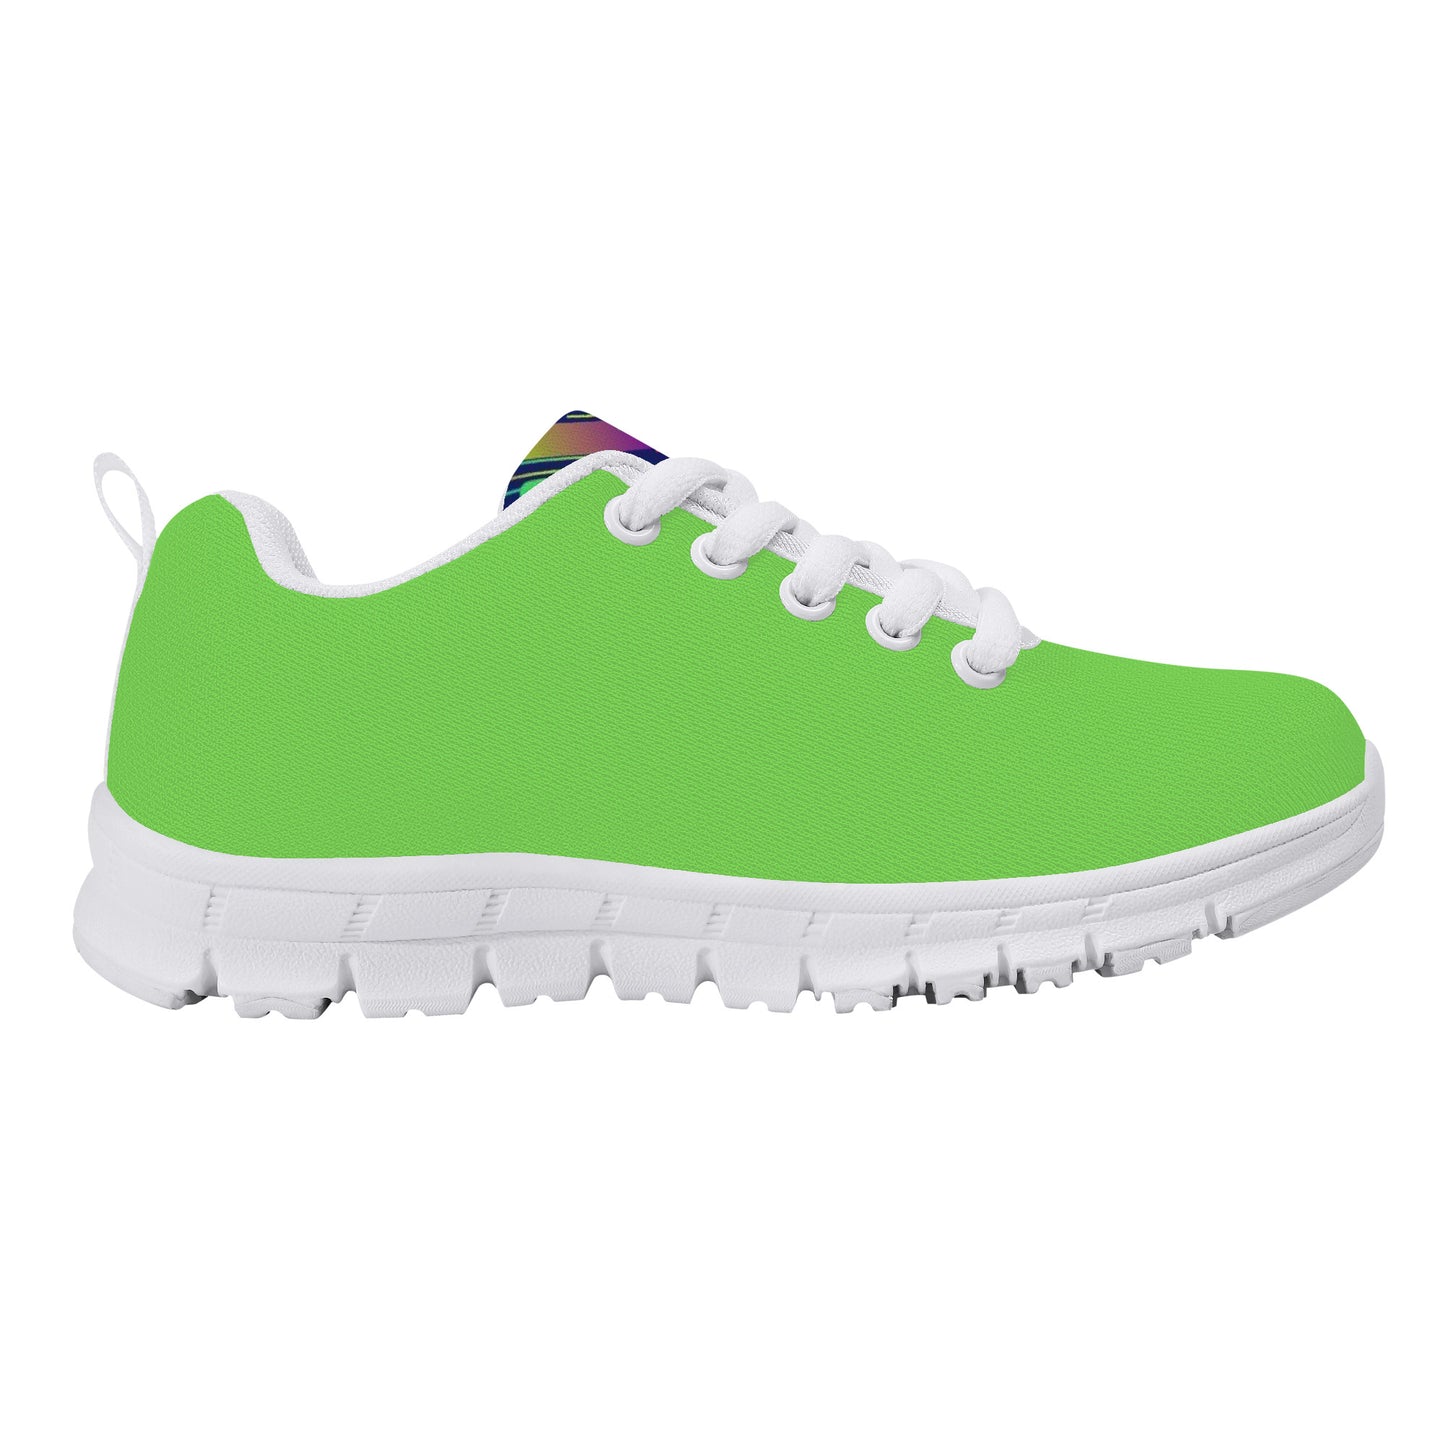 Kids Sneakers - Green